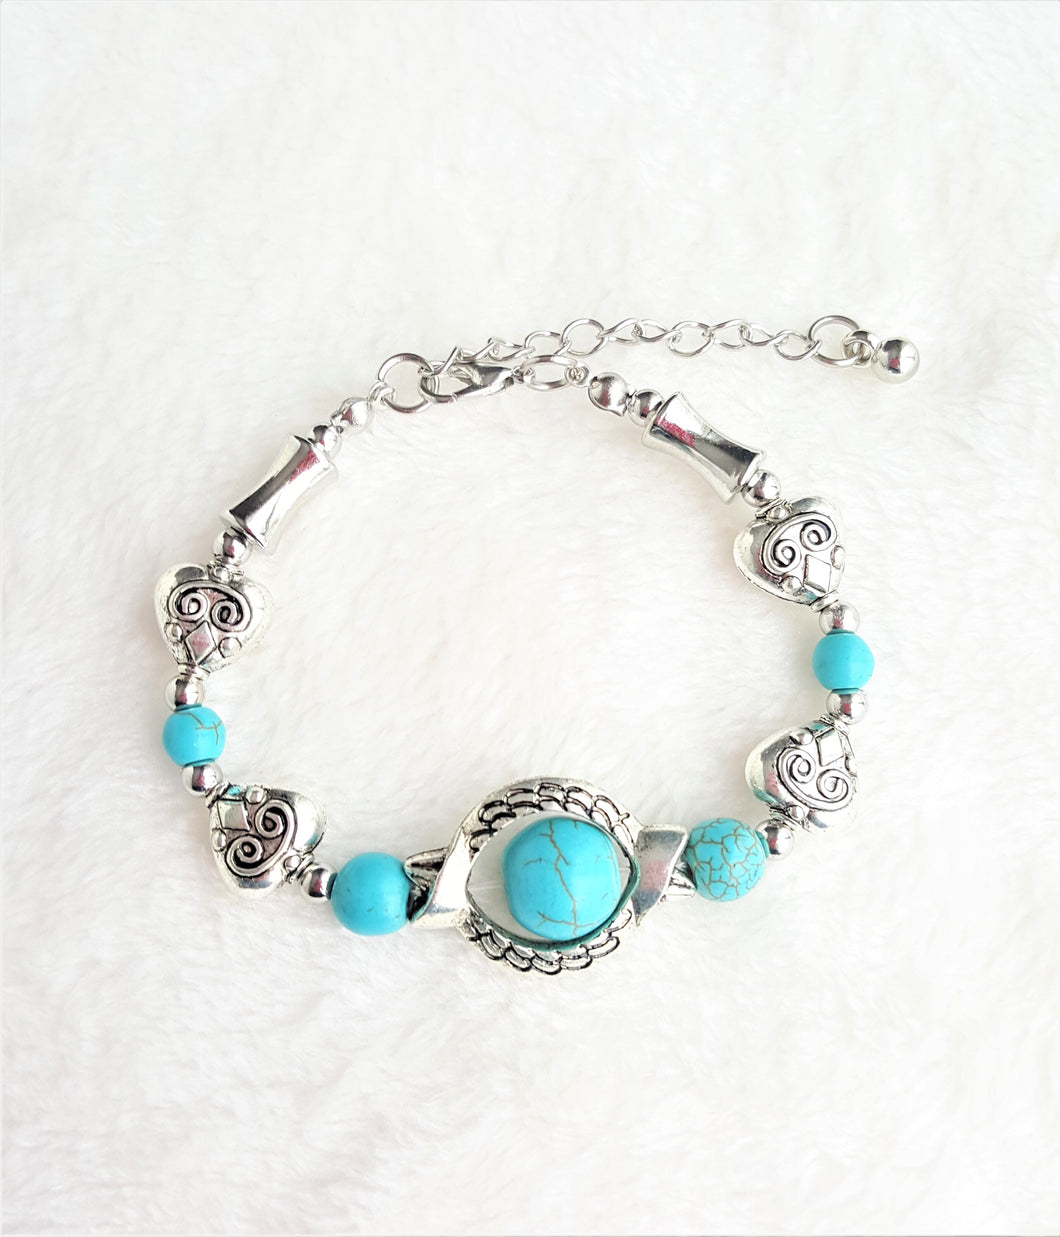 Alloy & Blue Stone Bracelet Beads Bohemian Handmade Bracelet, Tibetan Silver Color Bracelet with Turquoise Beads - Urban Flair USA